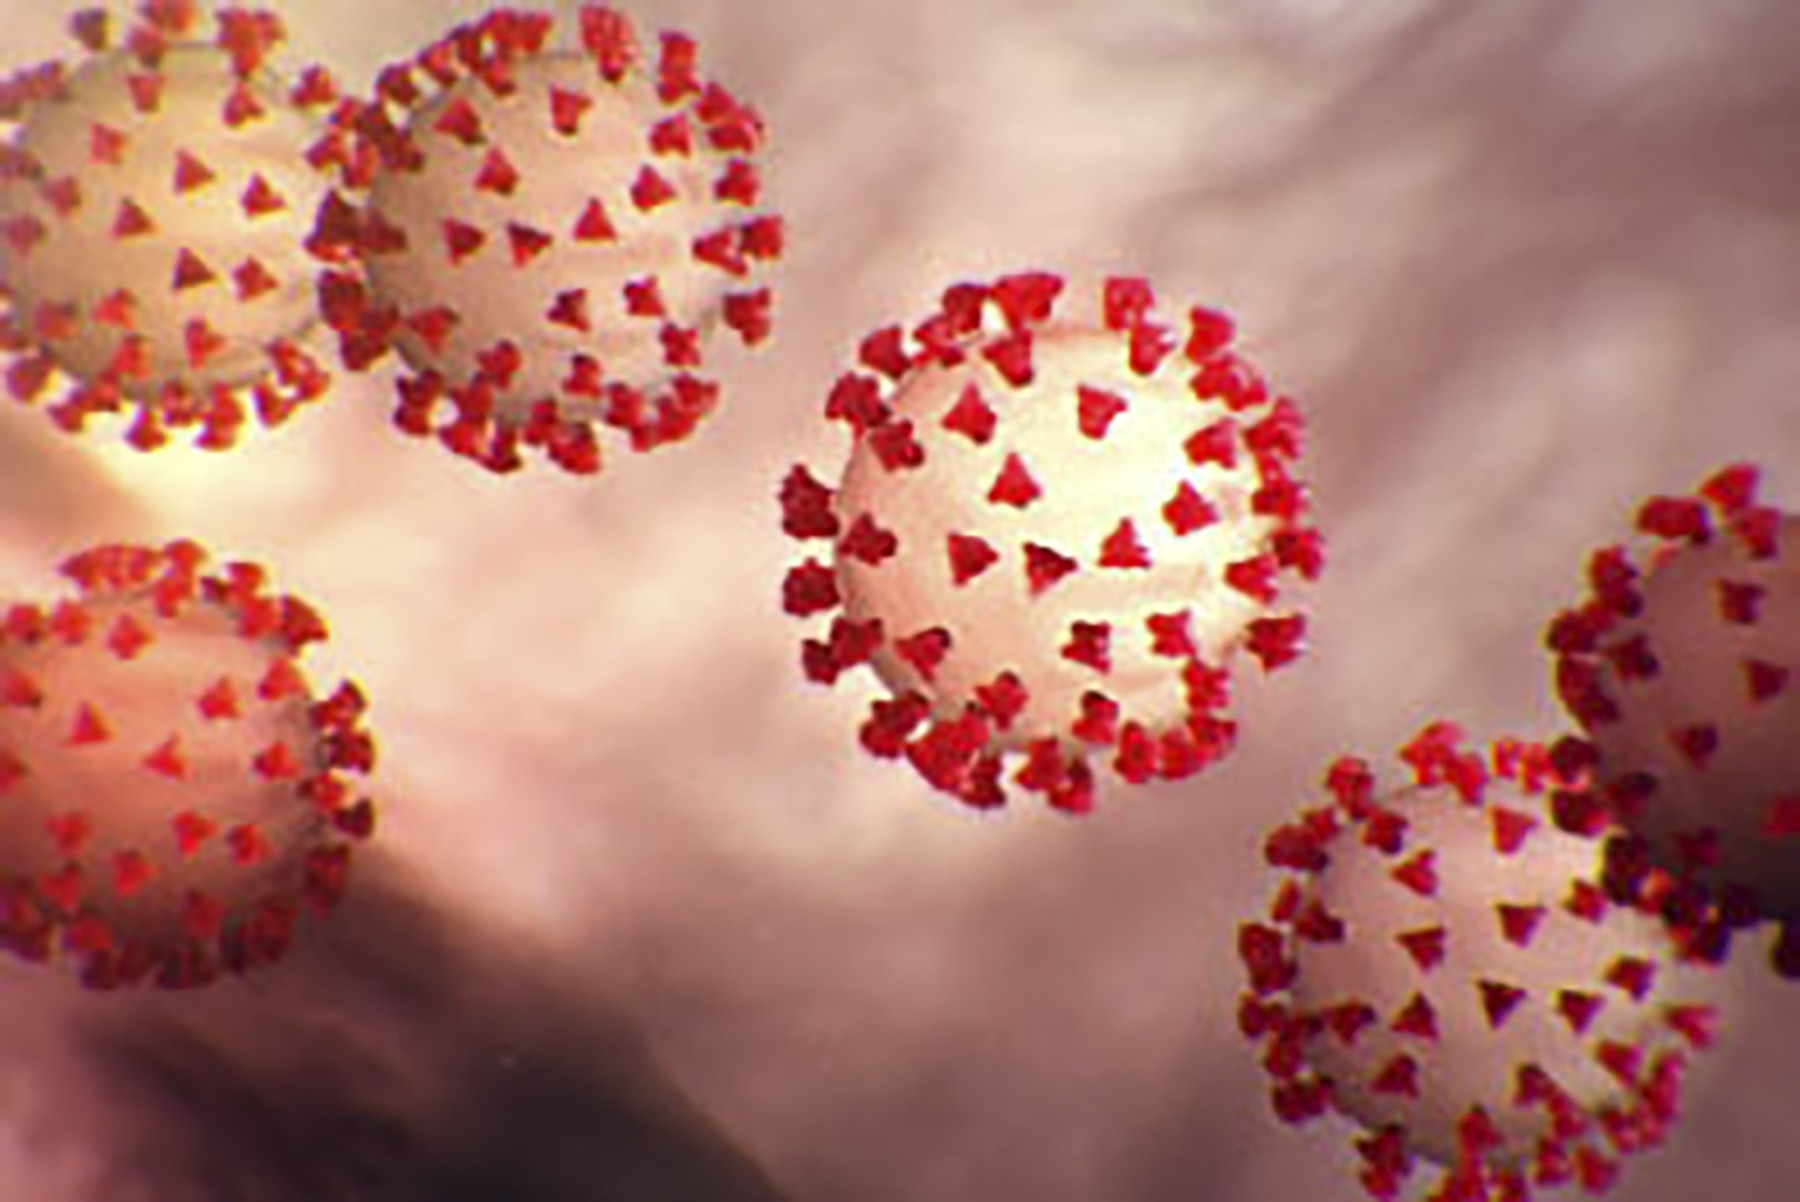 Autopsies help scientists gain a better understanding of the coronavirus. Photo: AFP